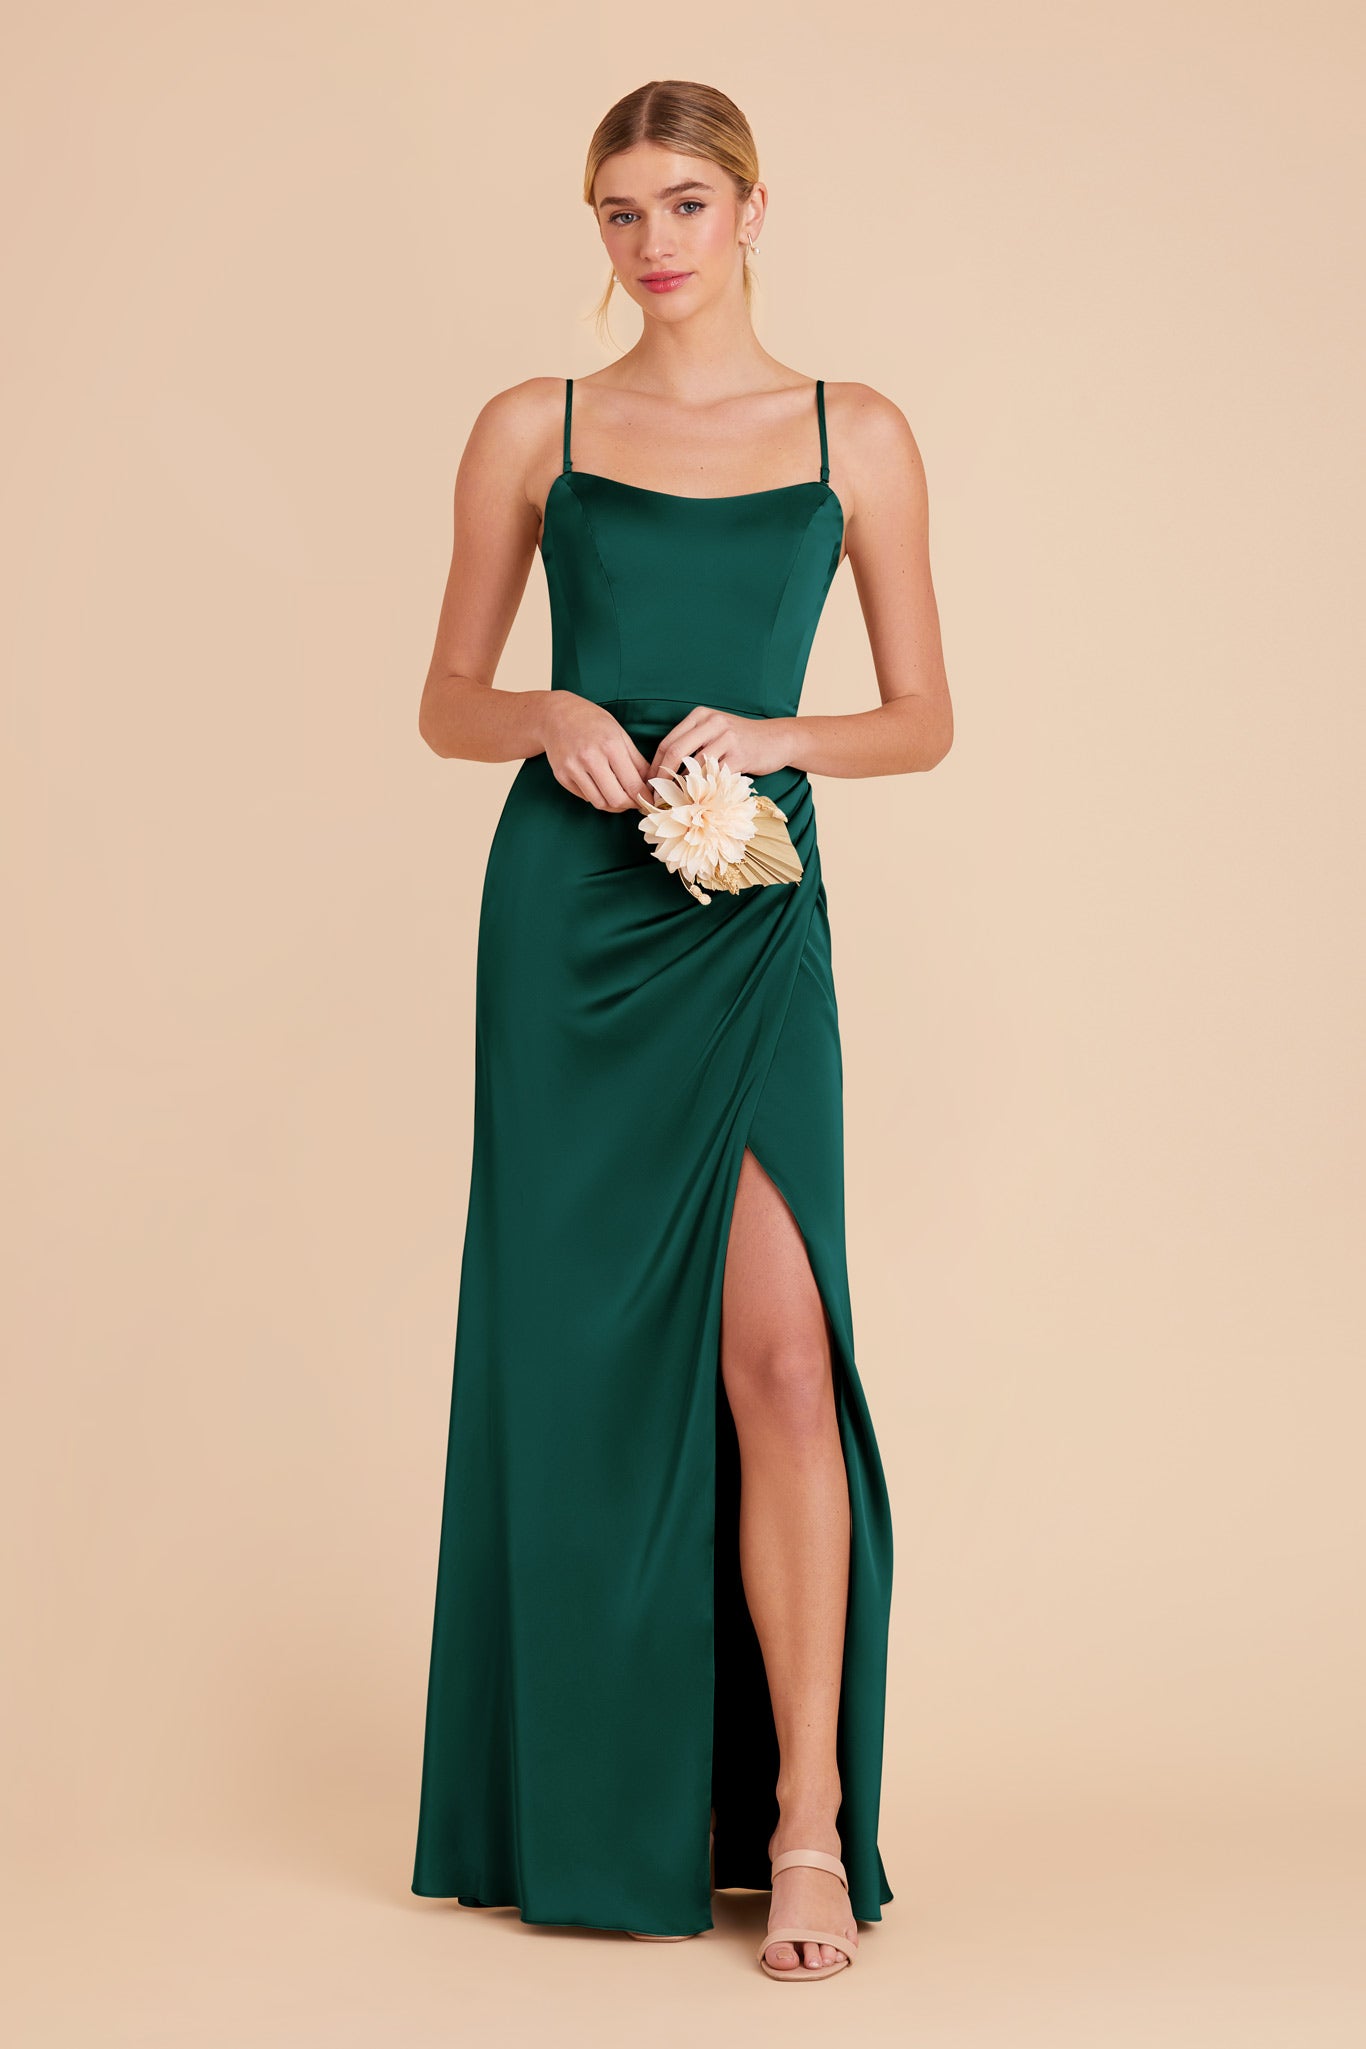 Emerald Anne Matte Satin Dress by Birdy Grey